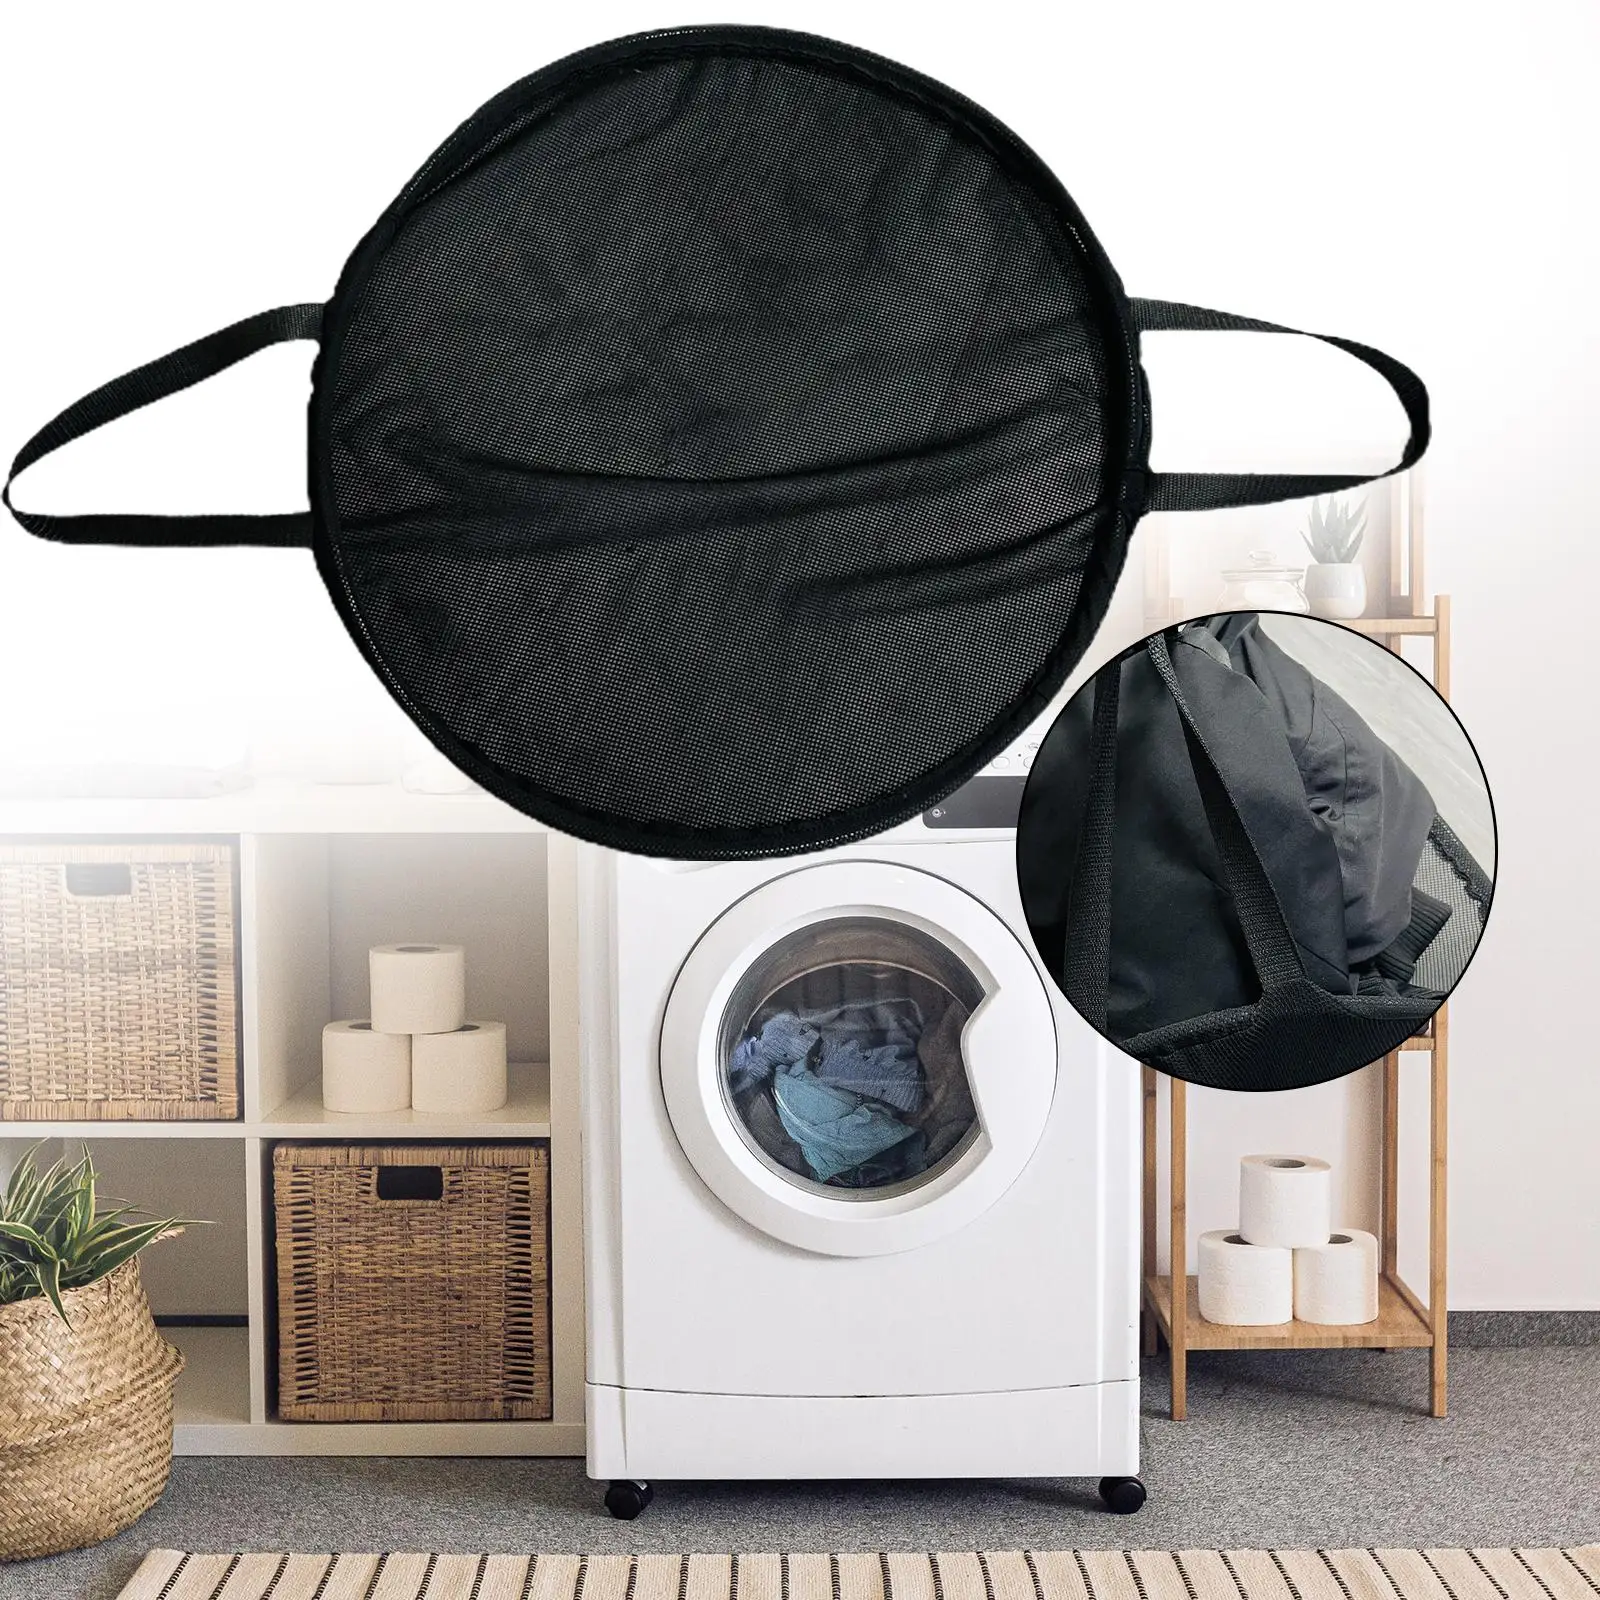 Collapsible Laundry Basket Storage Organizer for College Dorm Kids Room Blanket